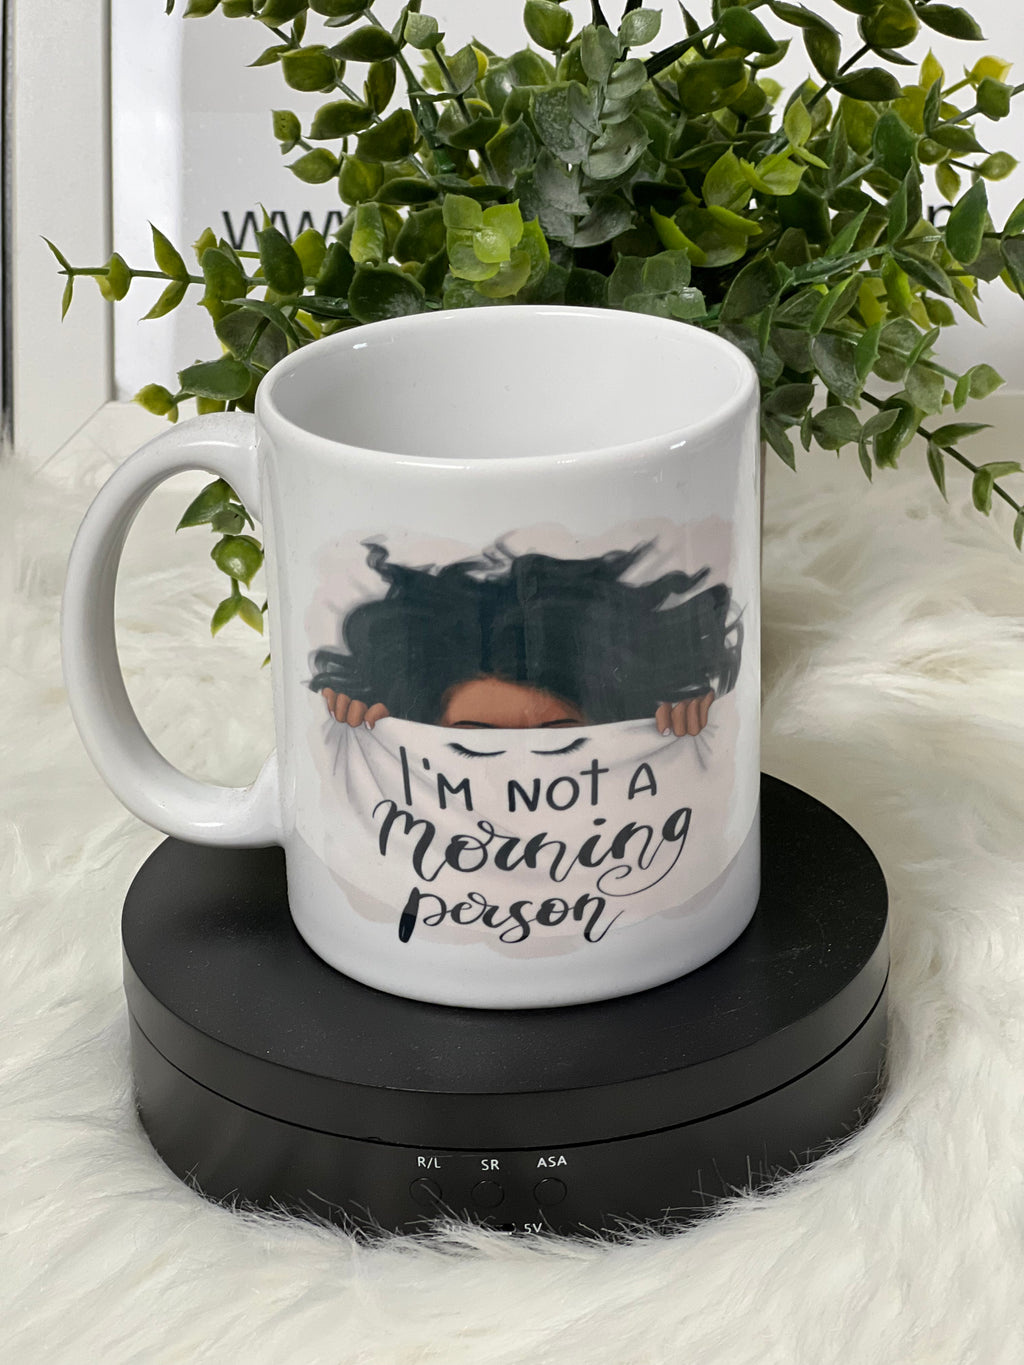 I’m not a morning person Mug